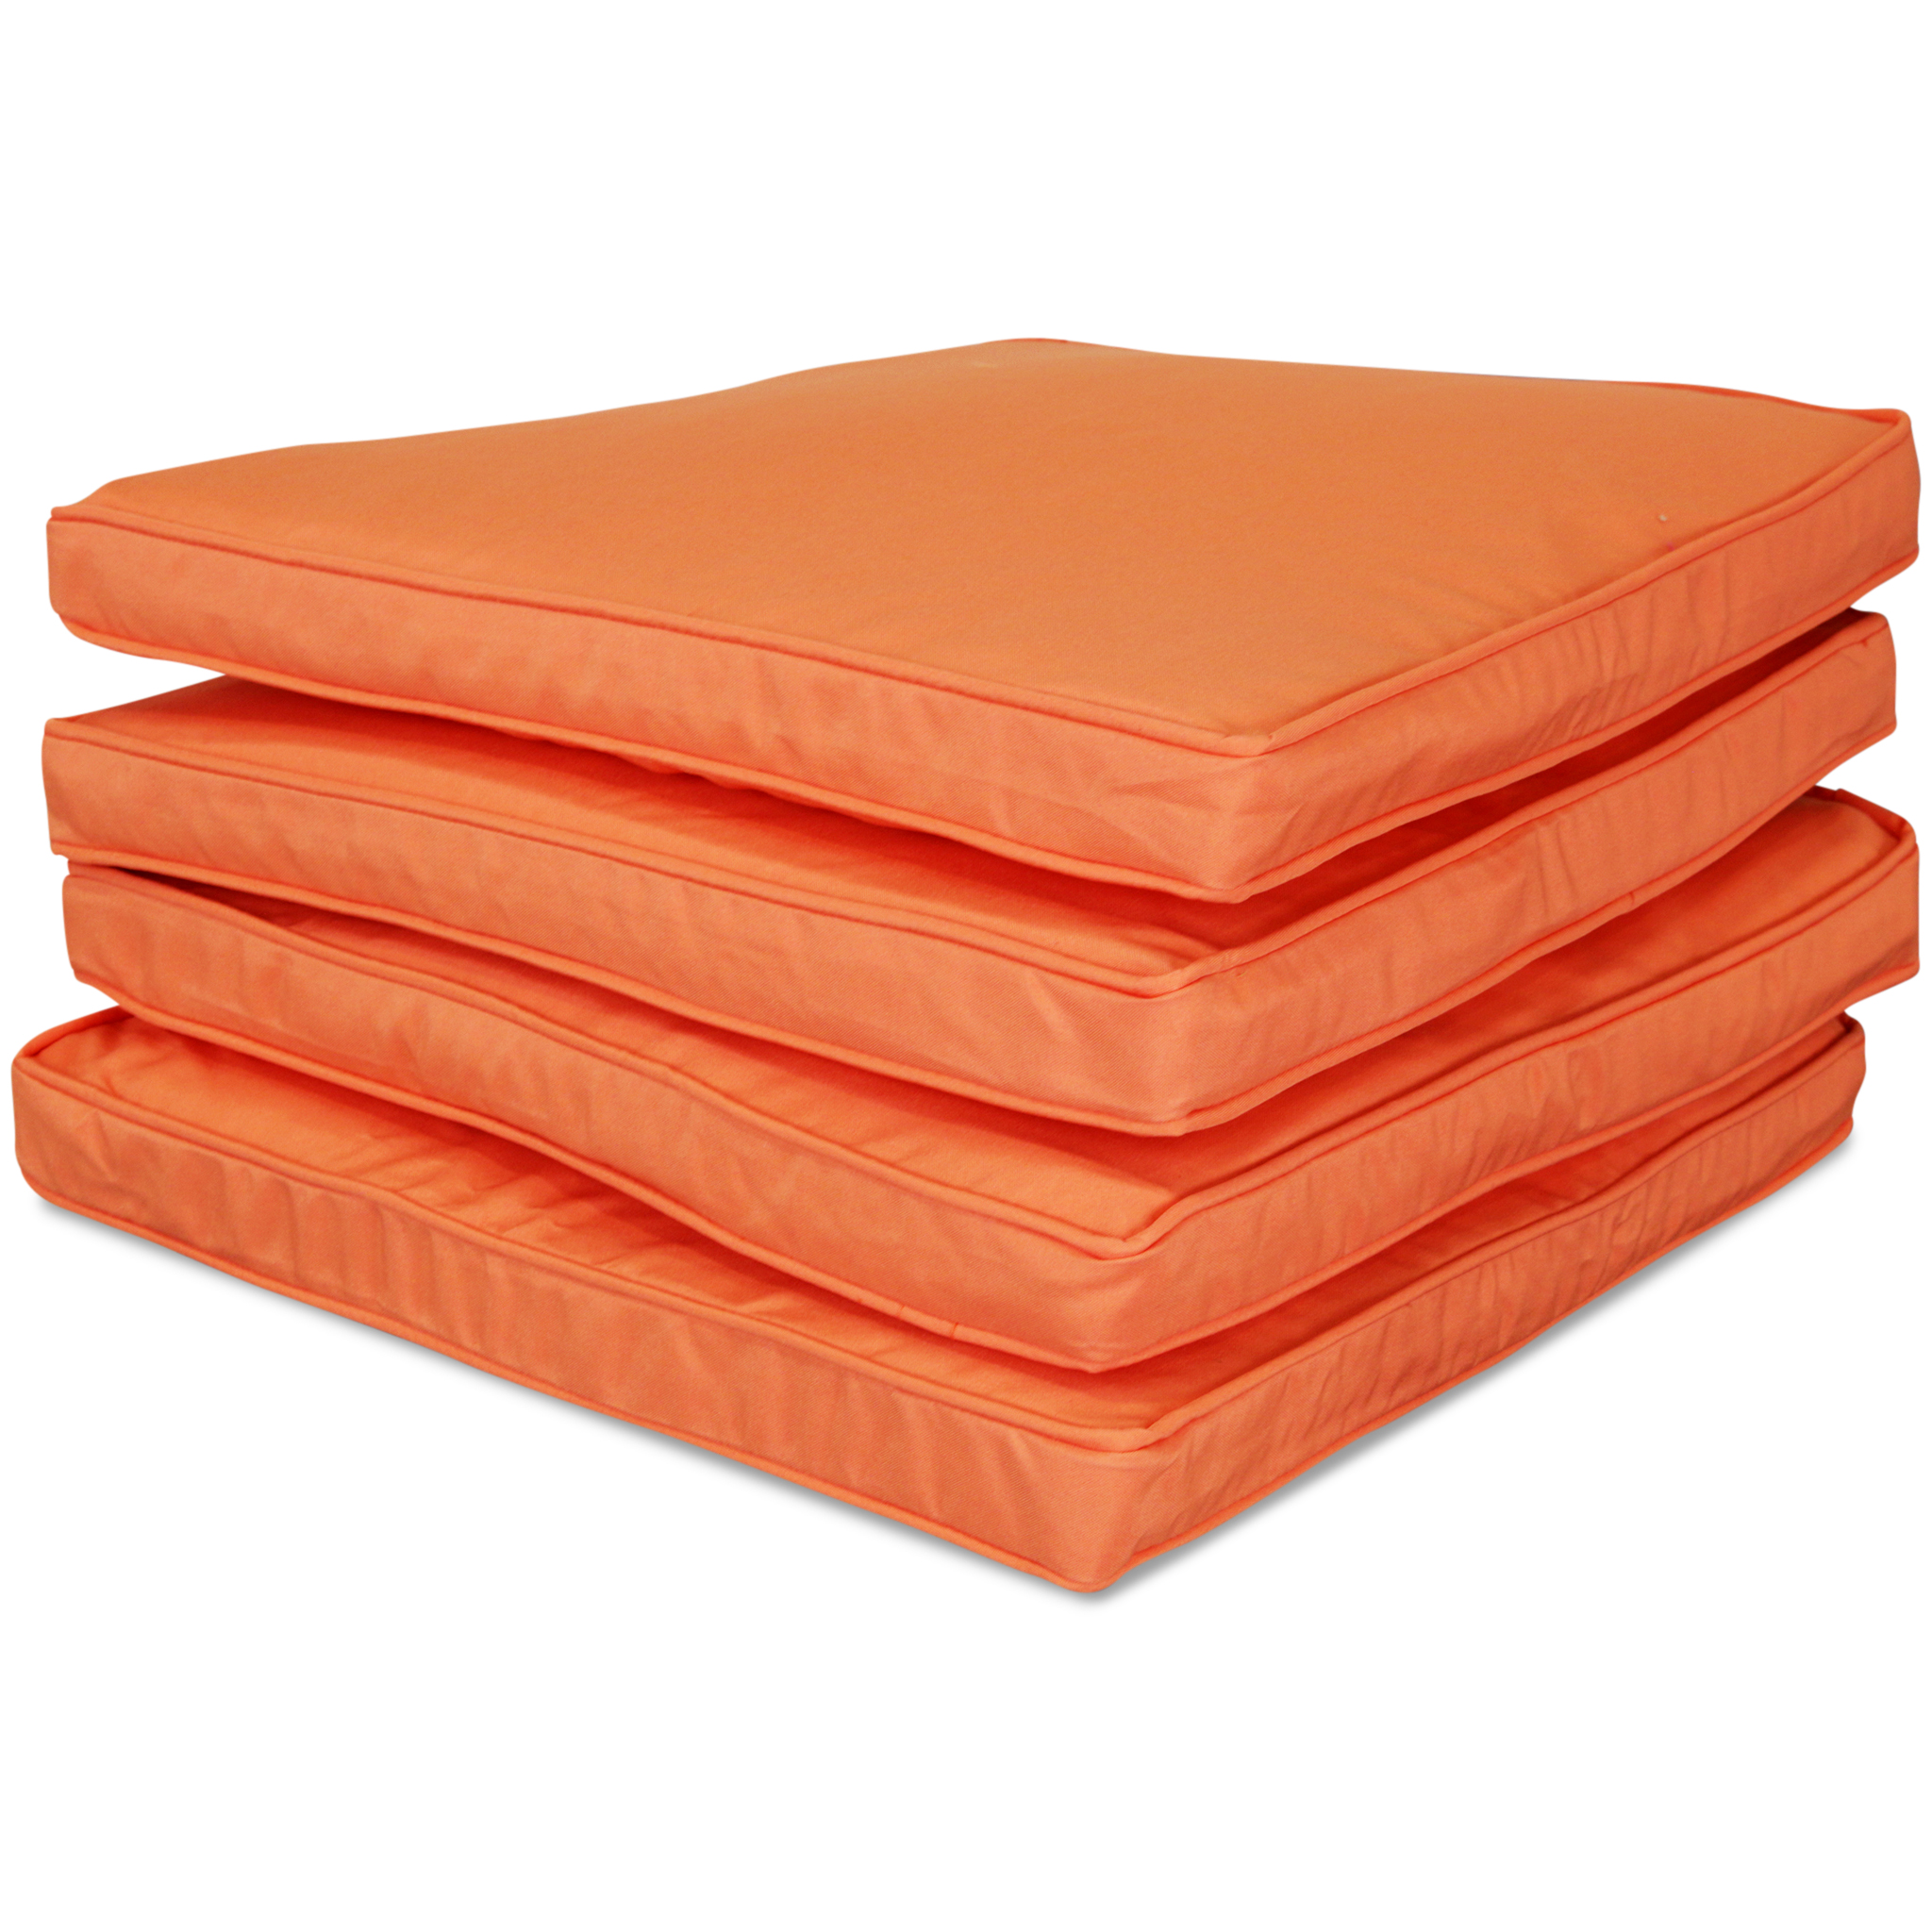 Dynklädsel till sittdynor, 4-pack - Orange